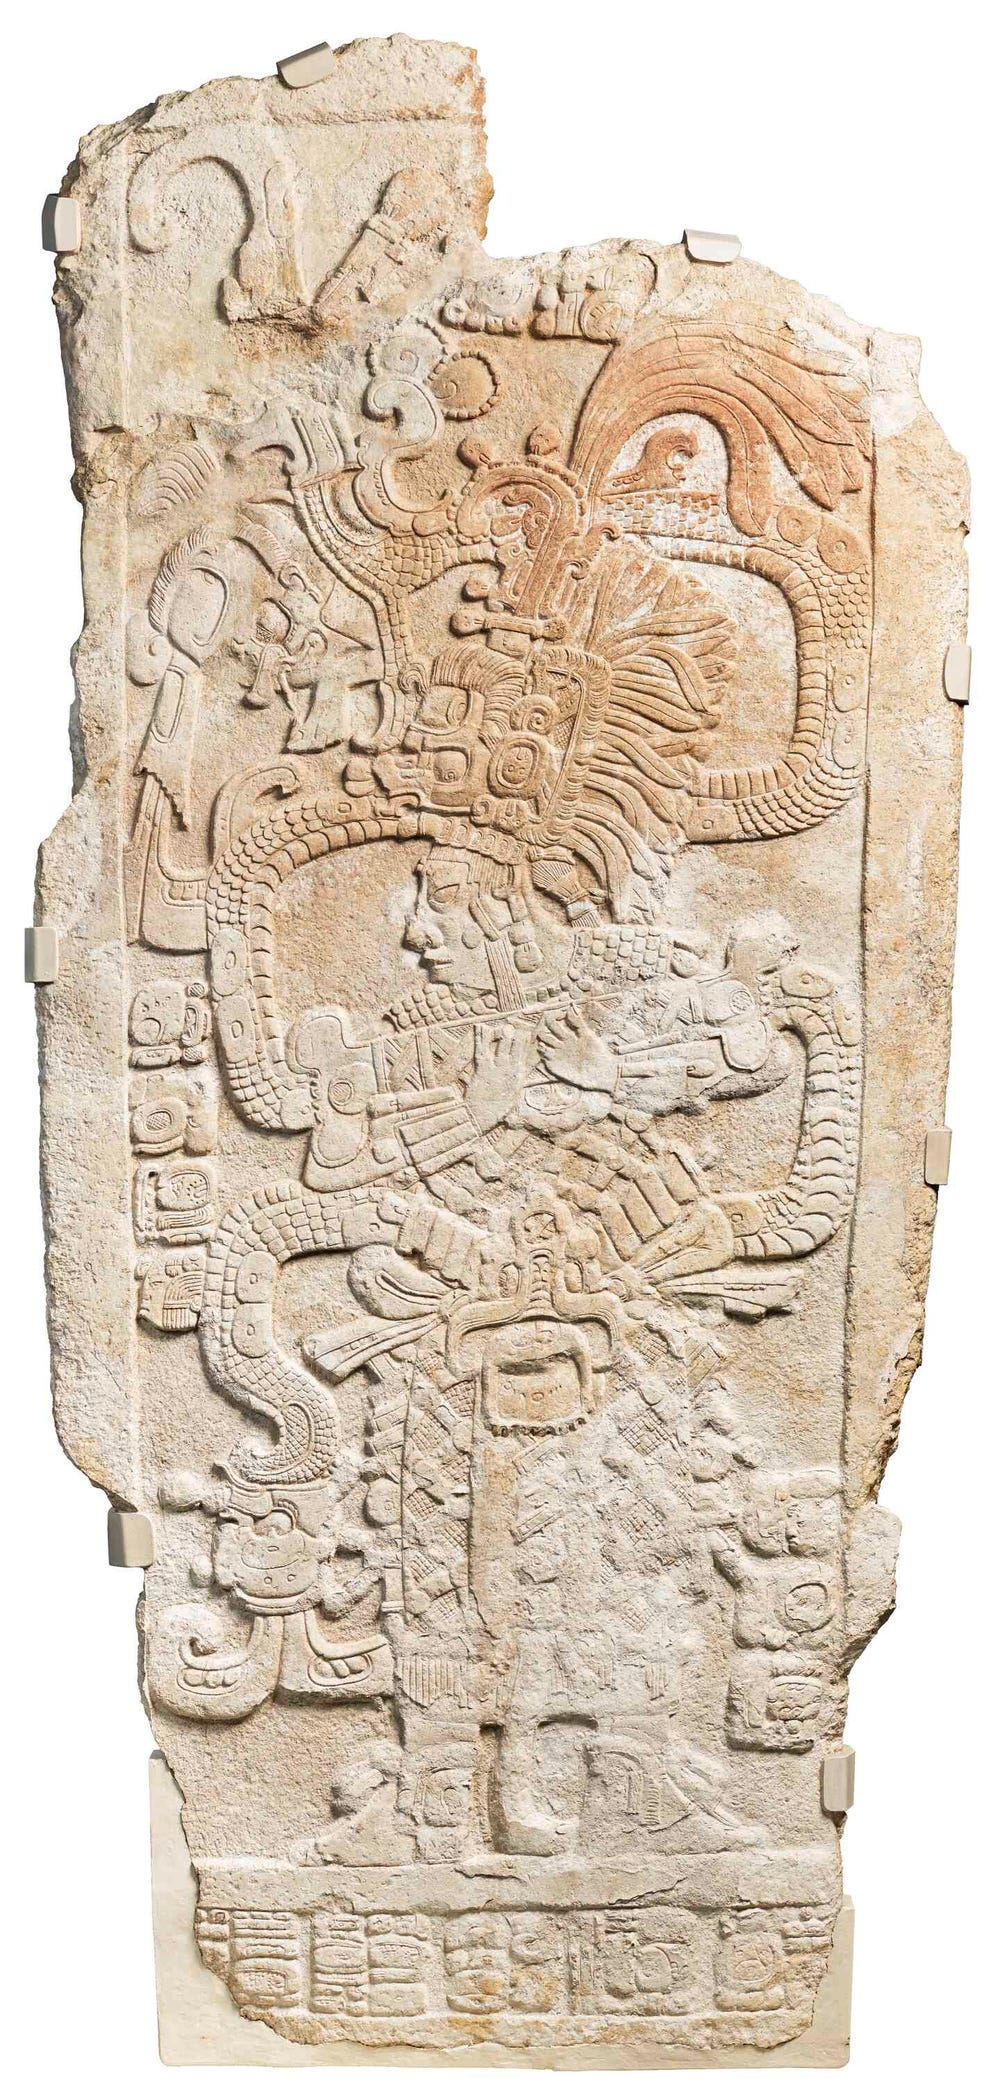 Mayan stone monument